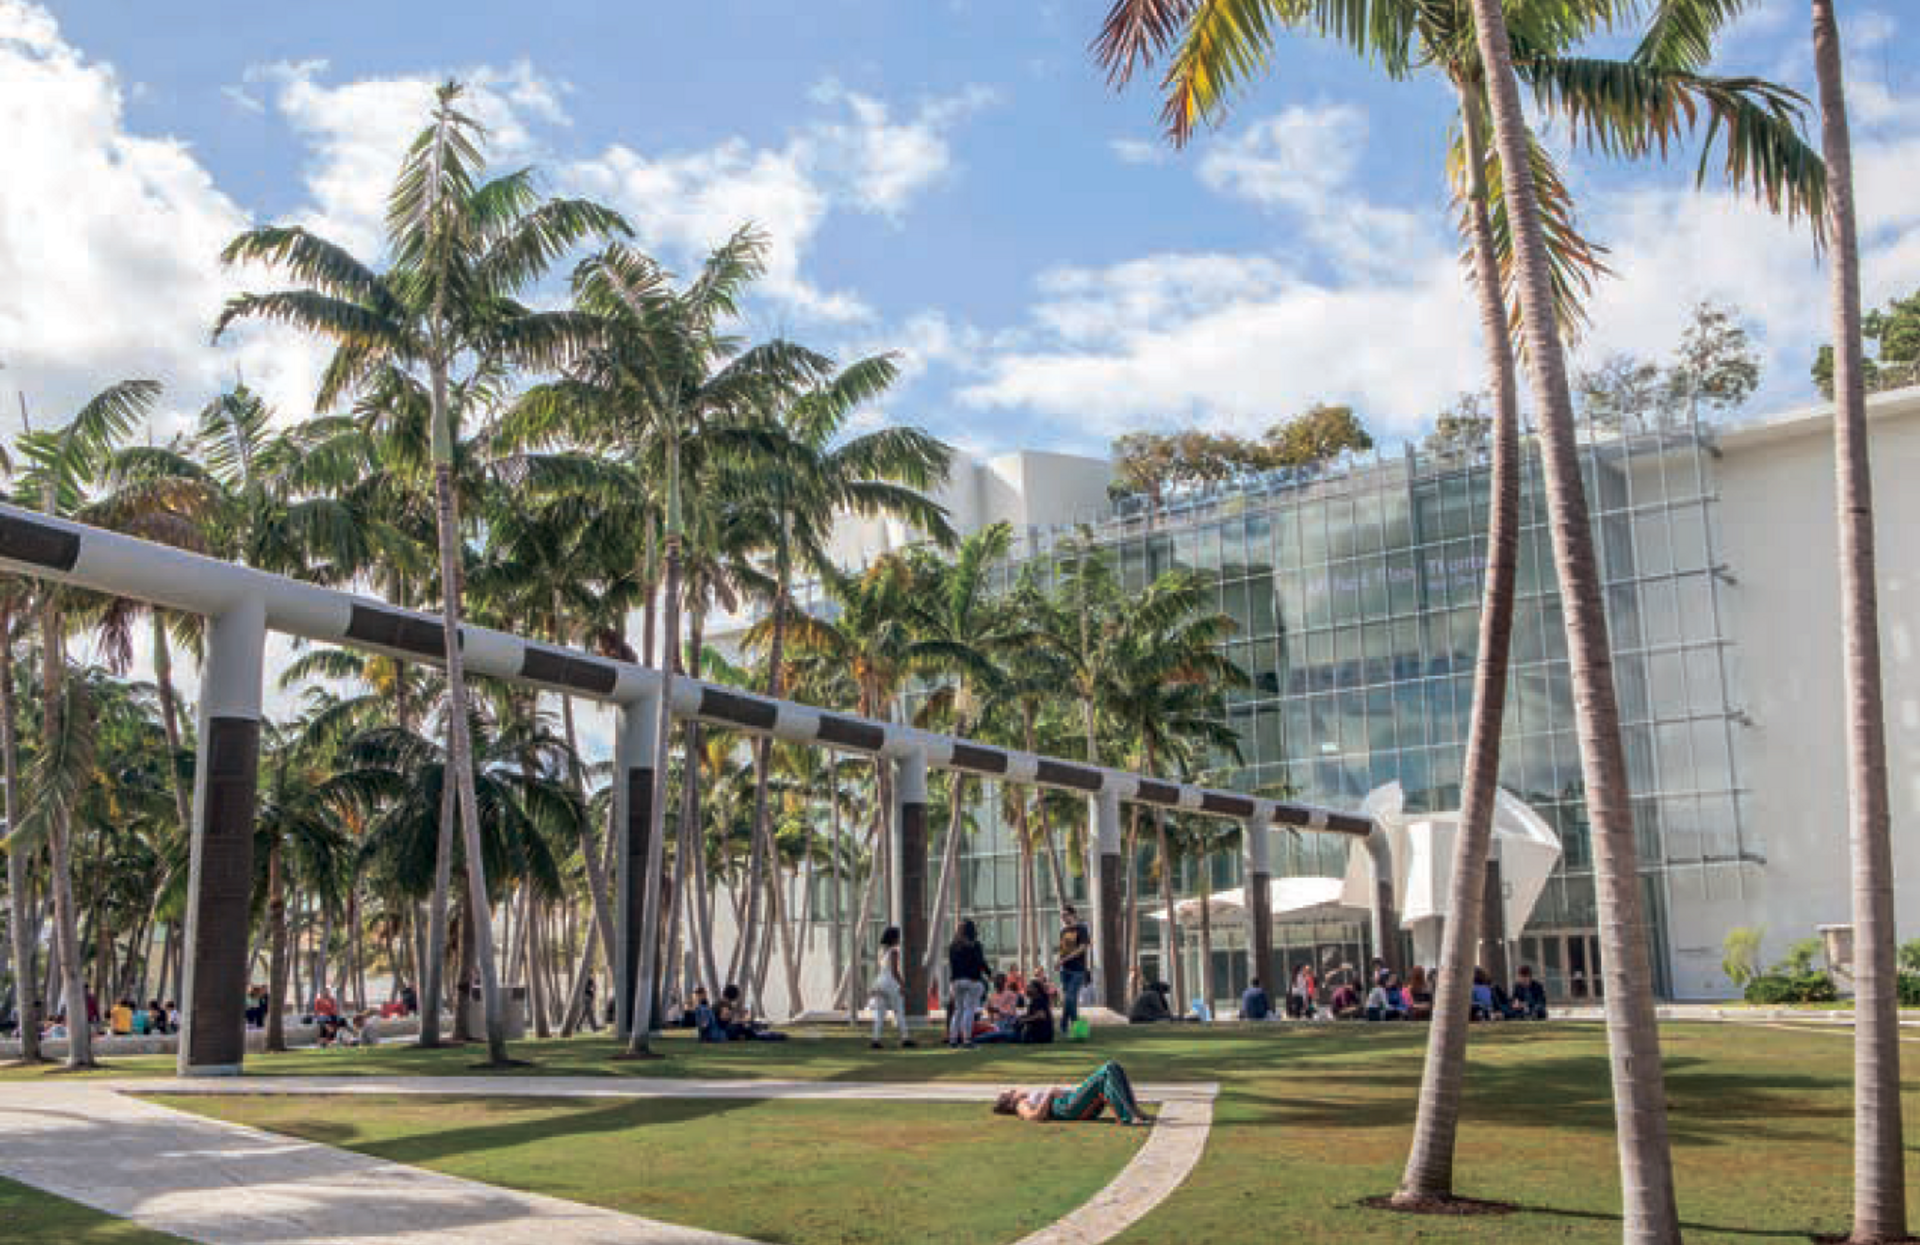 The New World Symphony’s SoundScape Park in Miami Beach is home to the artist’s new permanent audiovisual installation Sonic Dreamscapes © Vanessa Ruiz